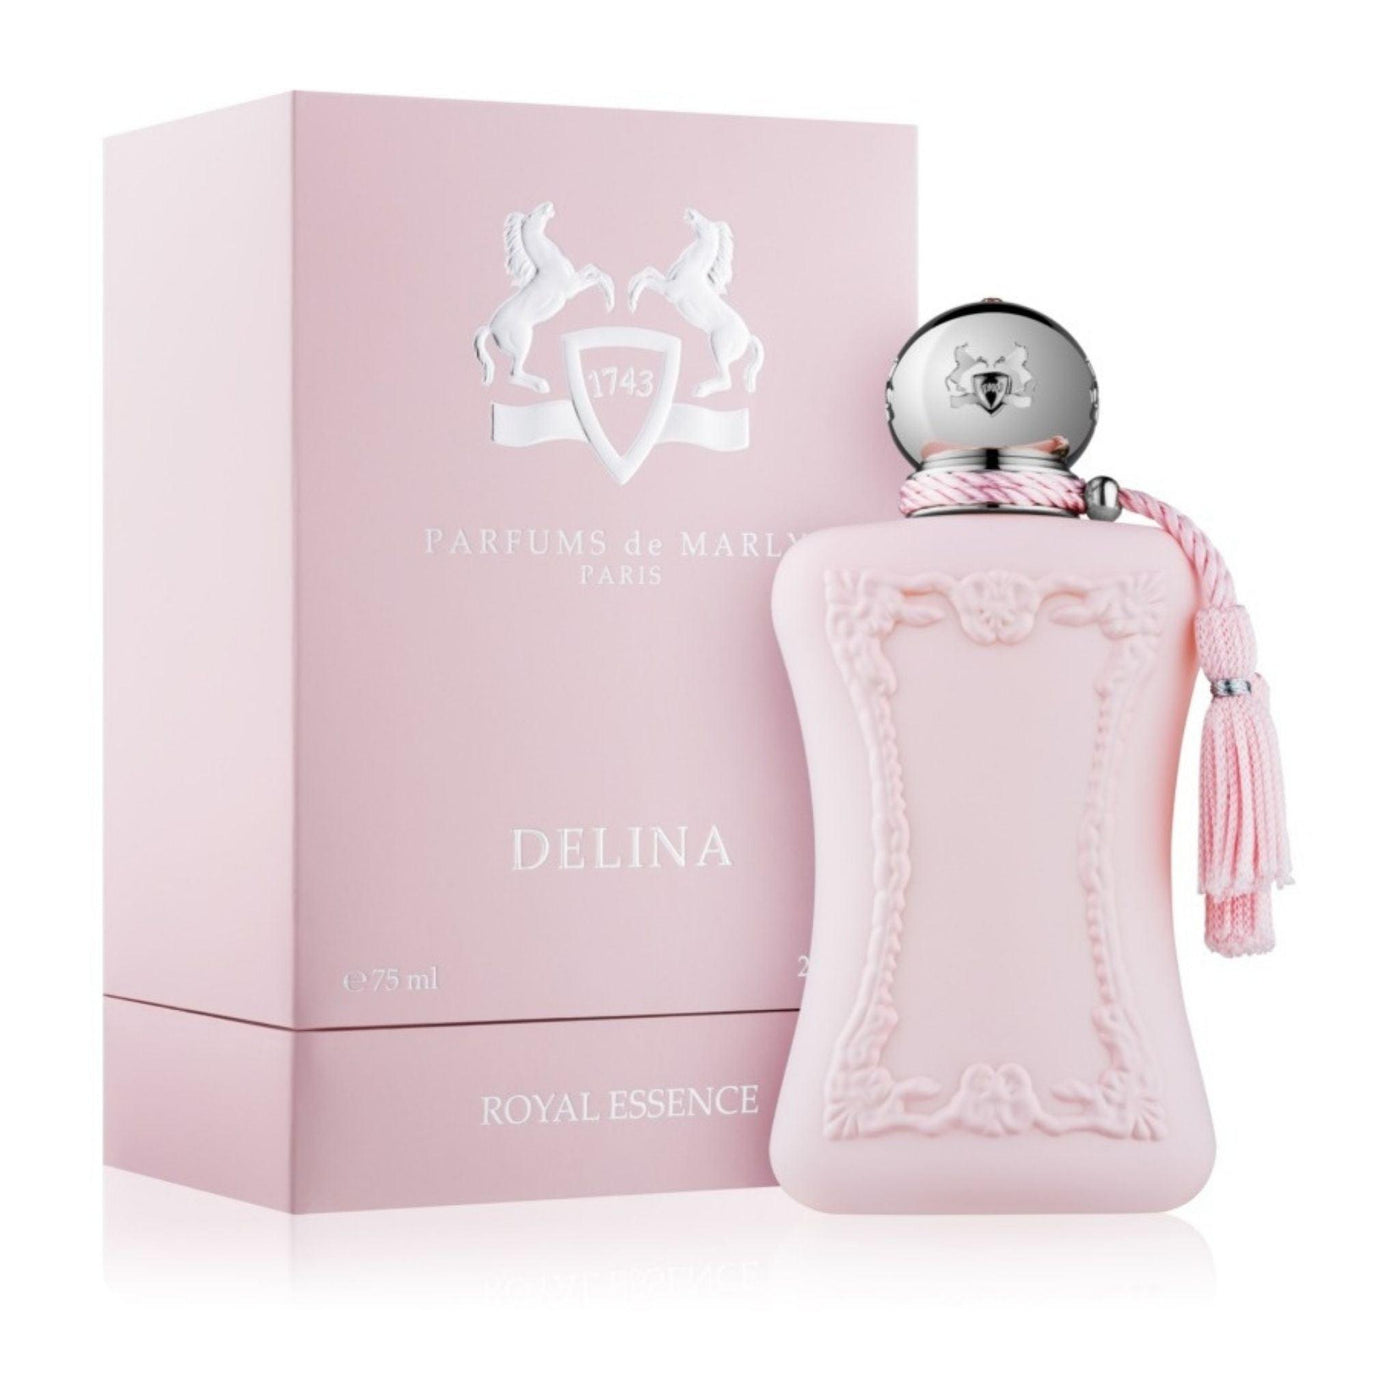 Delina perfume